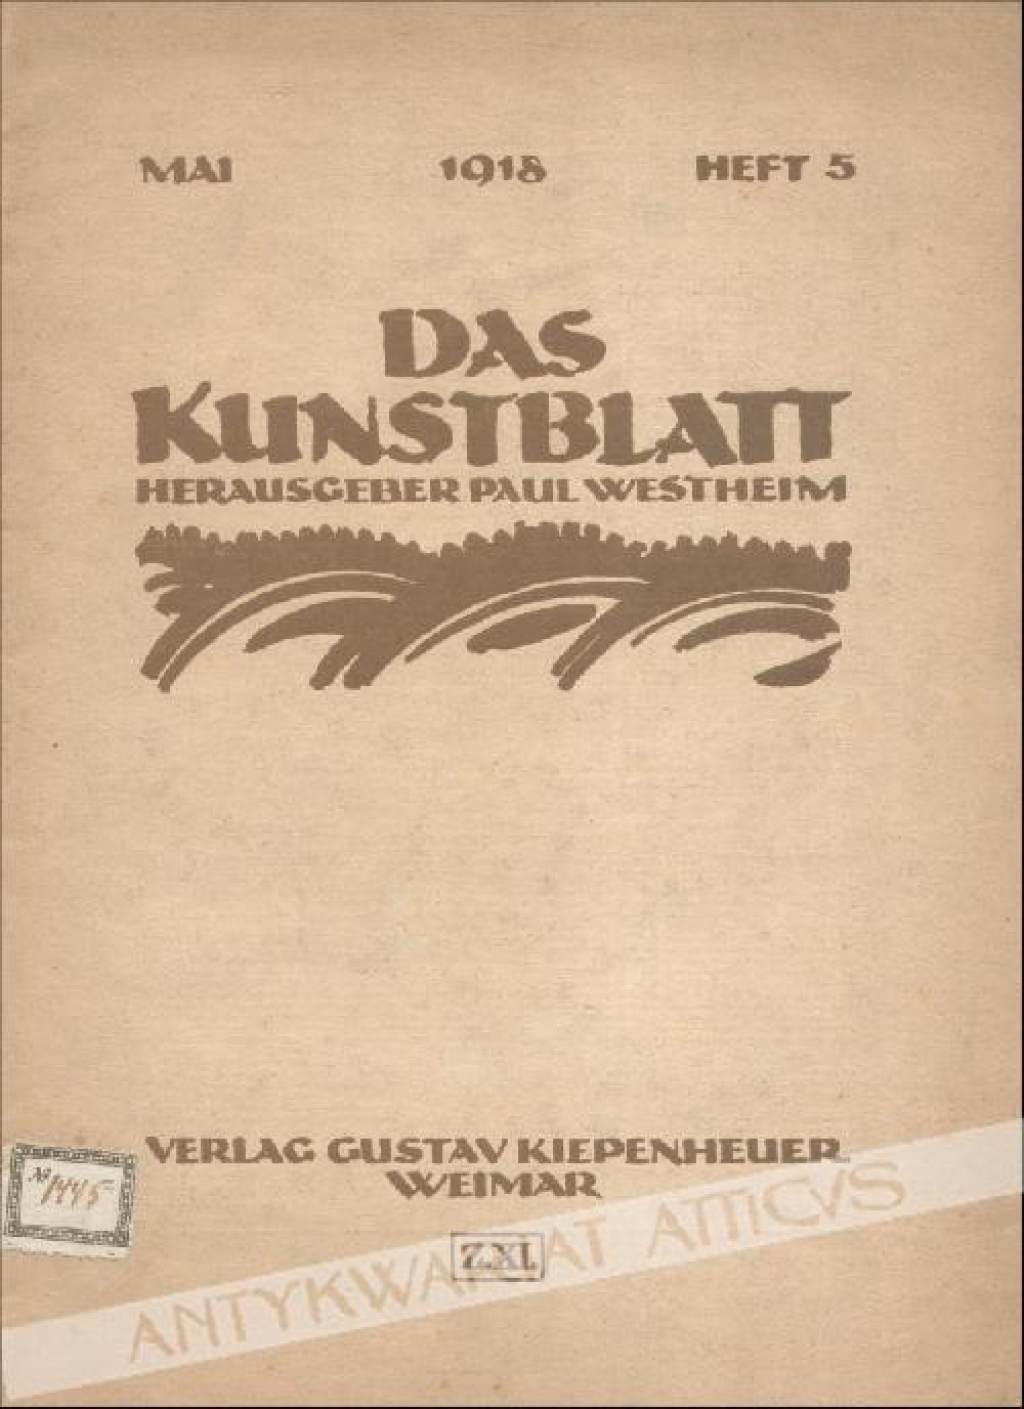 Das Kunstblatt. Heft 5, Mai 1918.